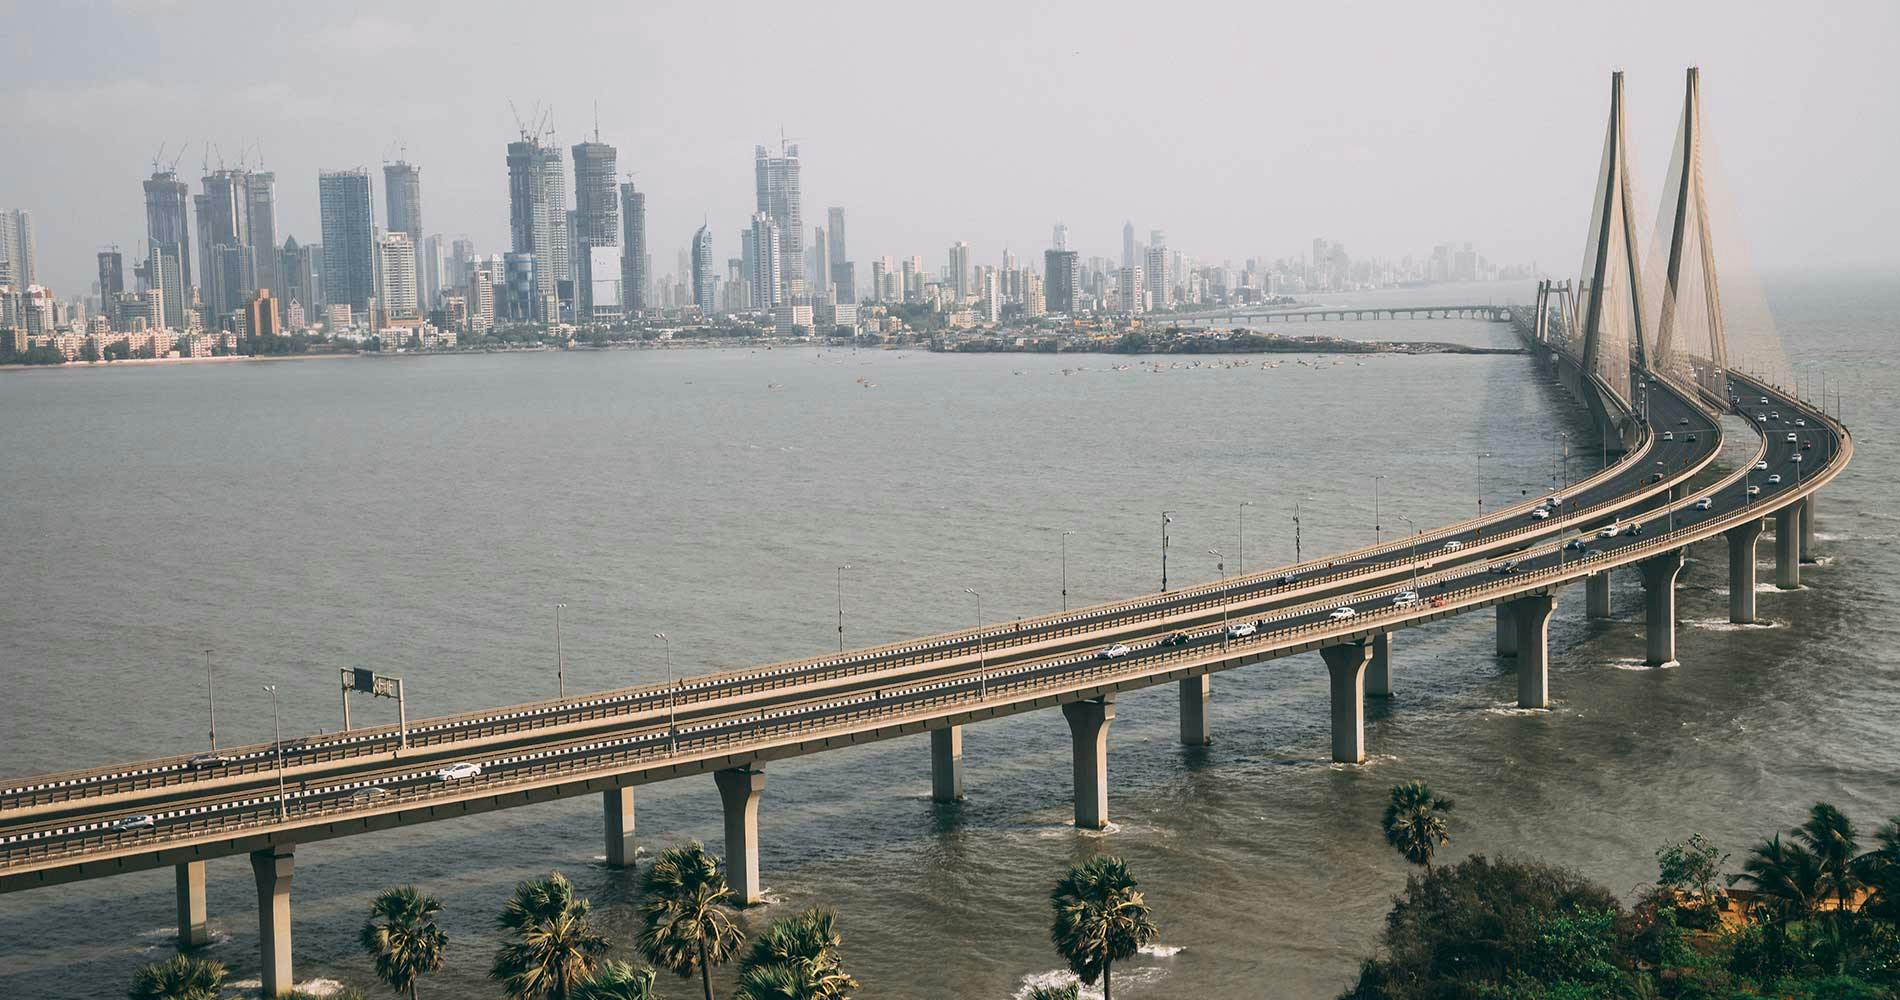 Top Residential Areas in Mumbai